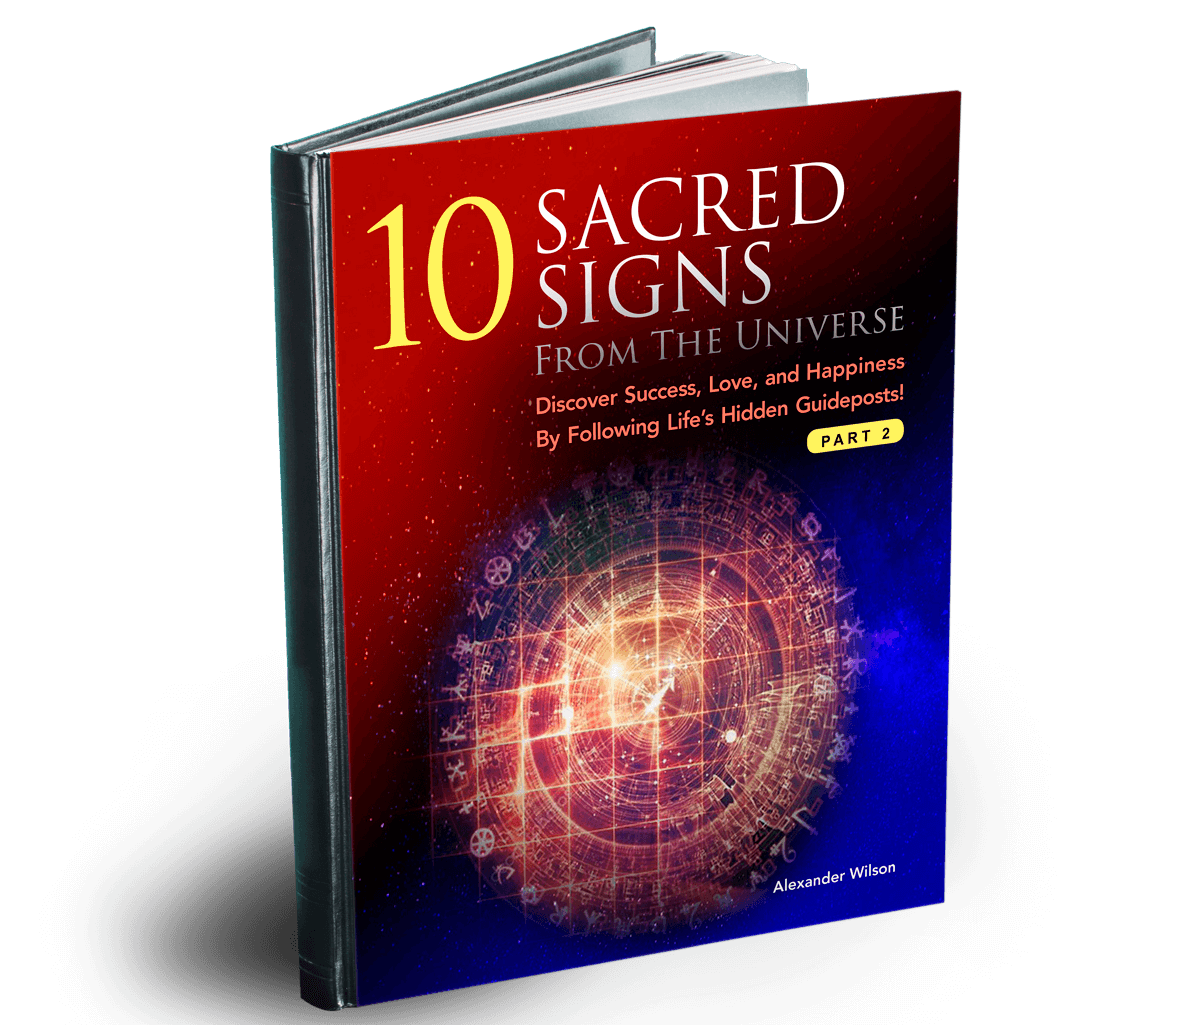 10 Sacred Signs